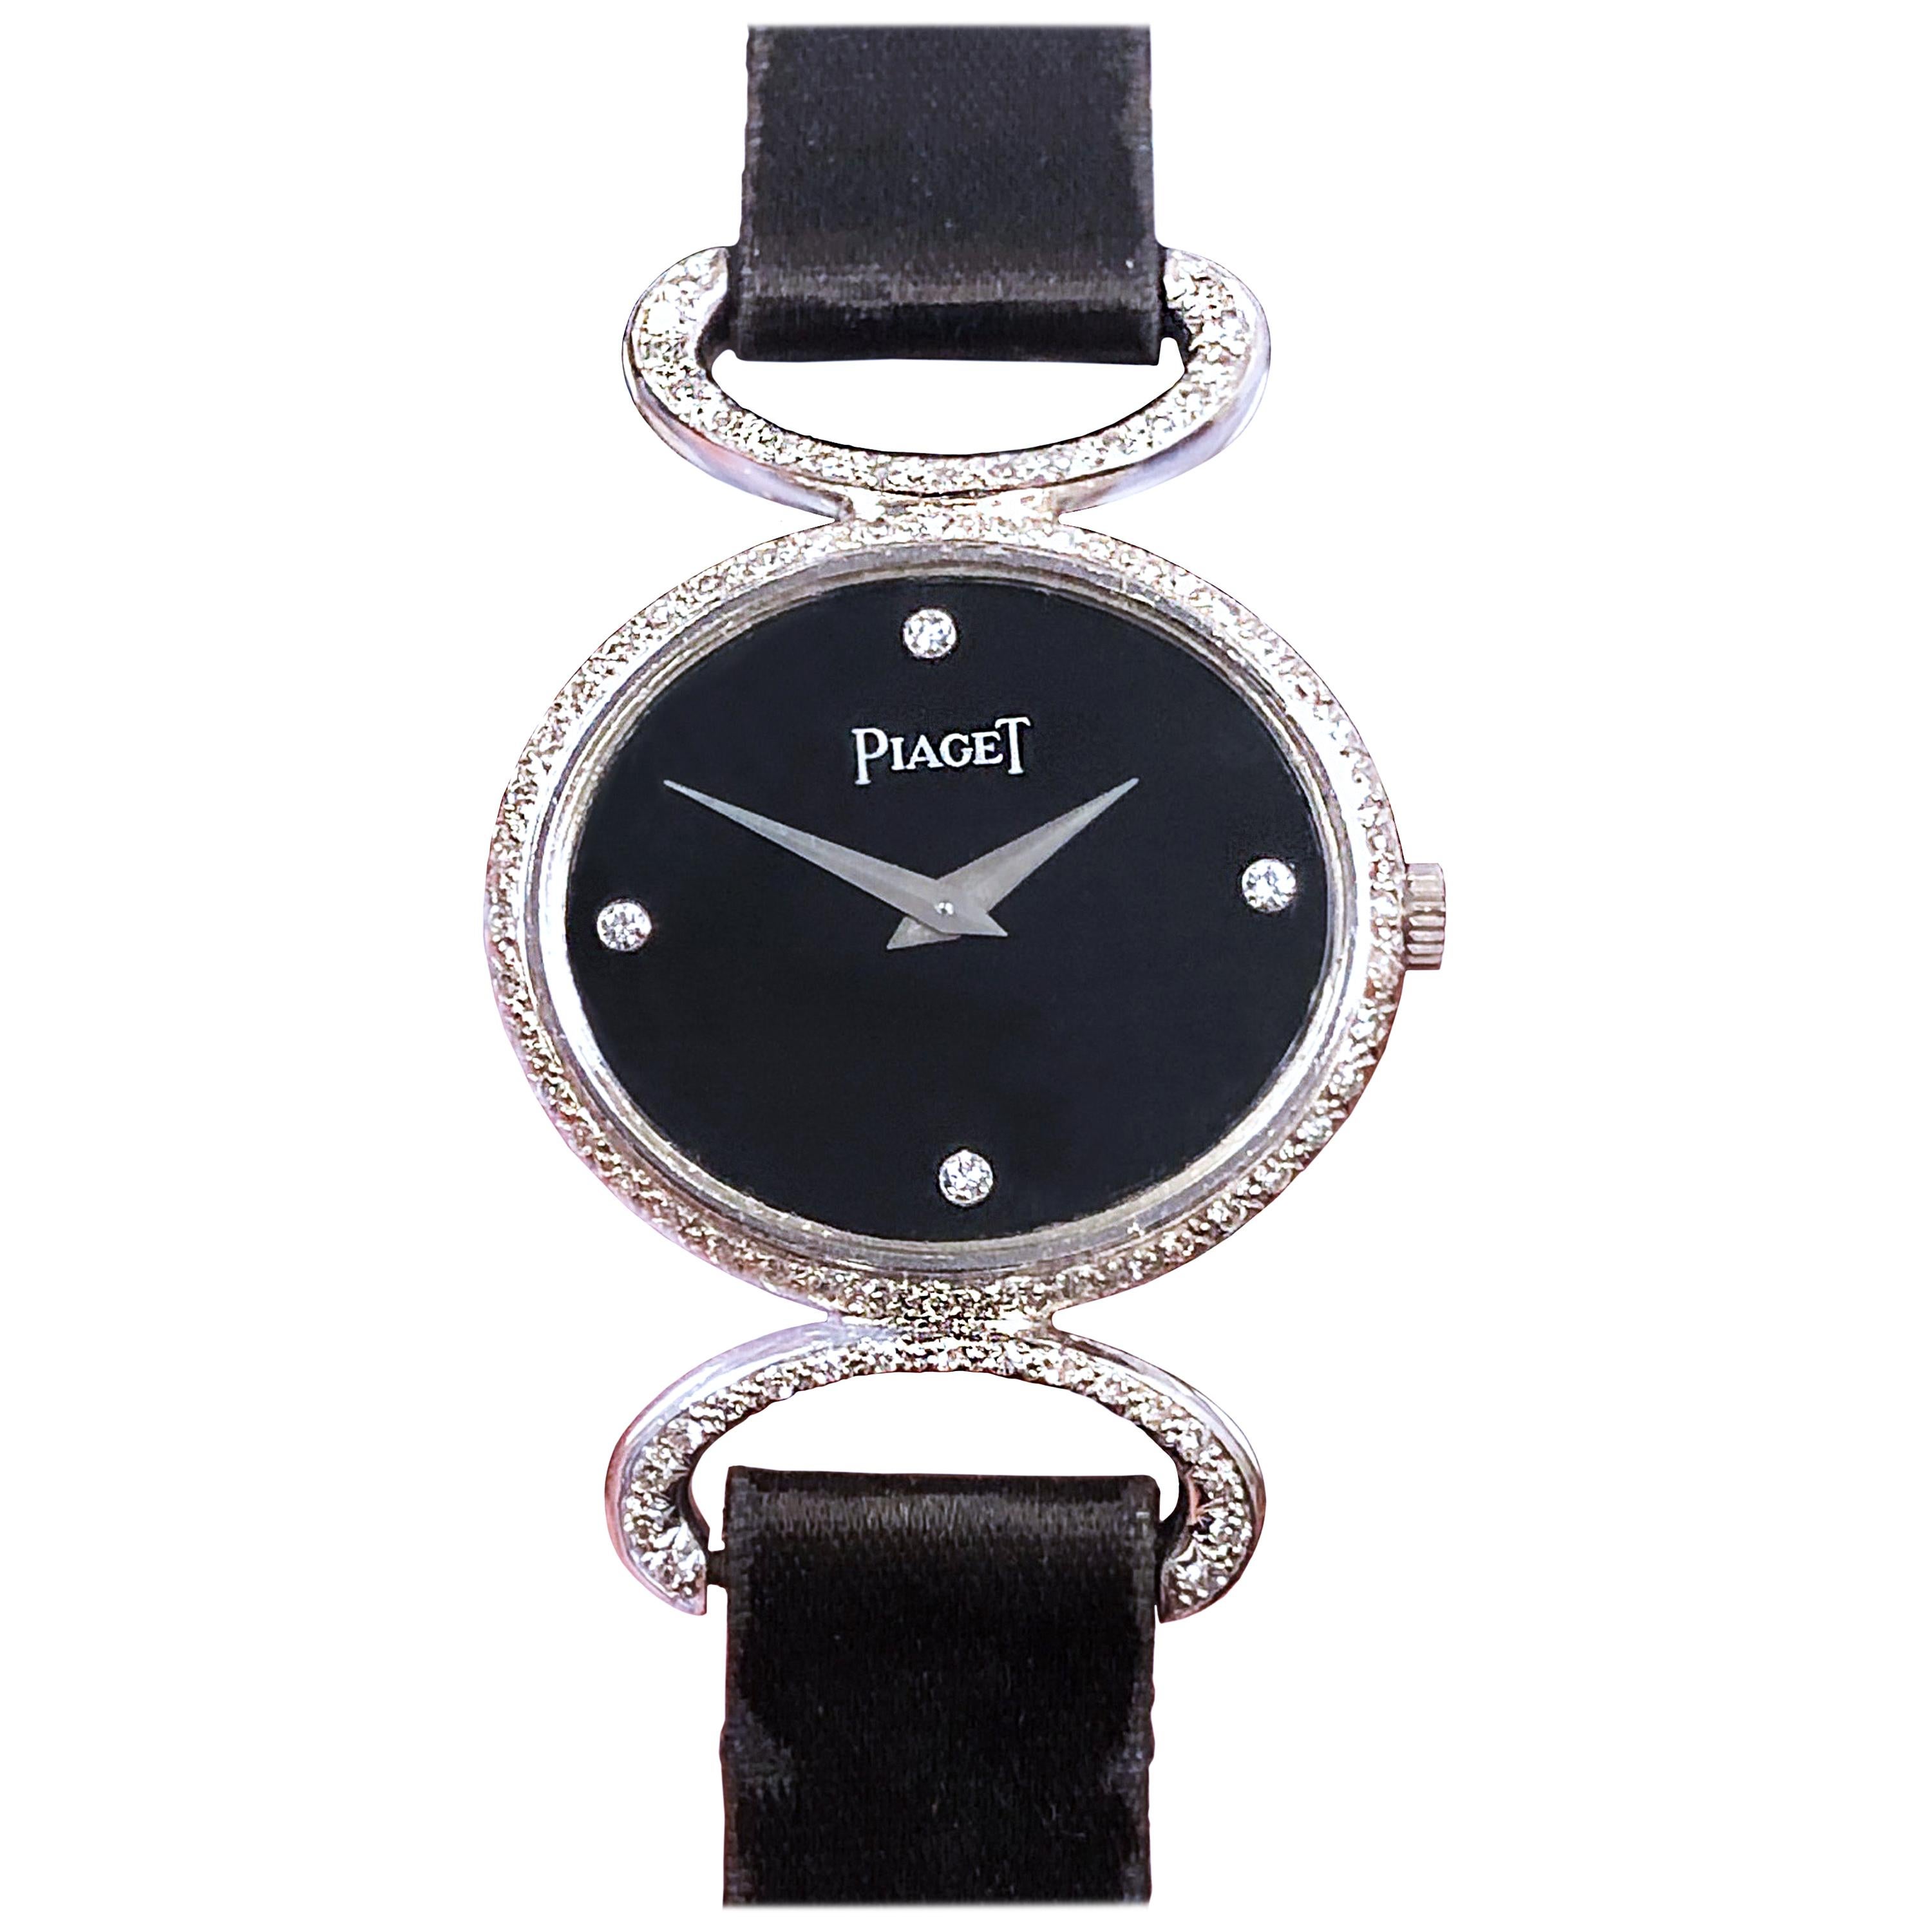 Piaget Ladies White Gold and Diamond Wrist Watch